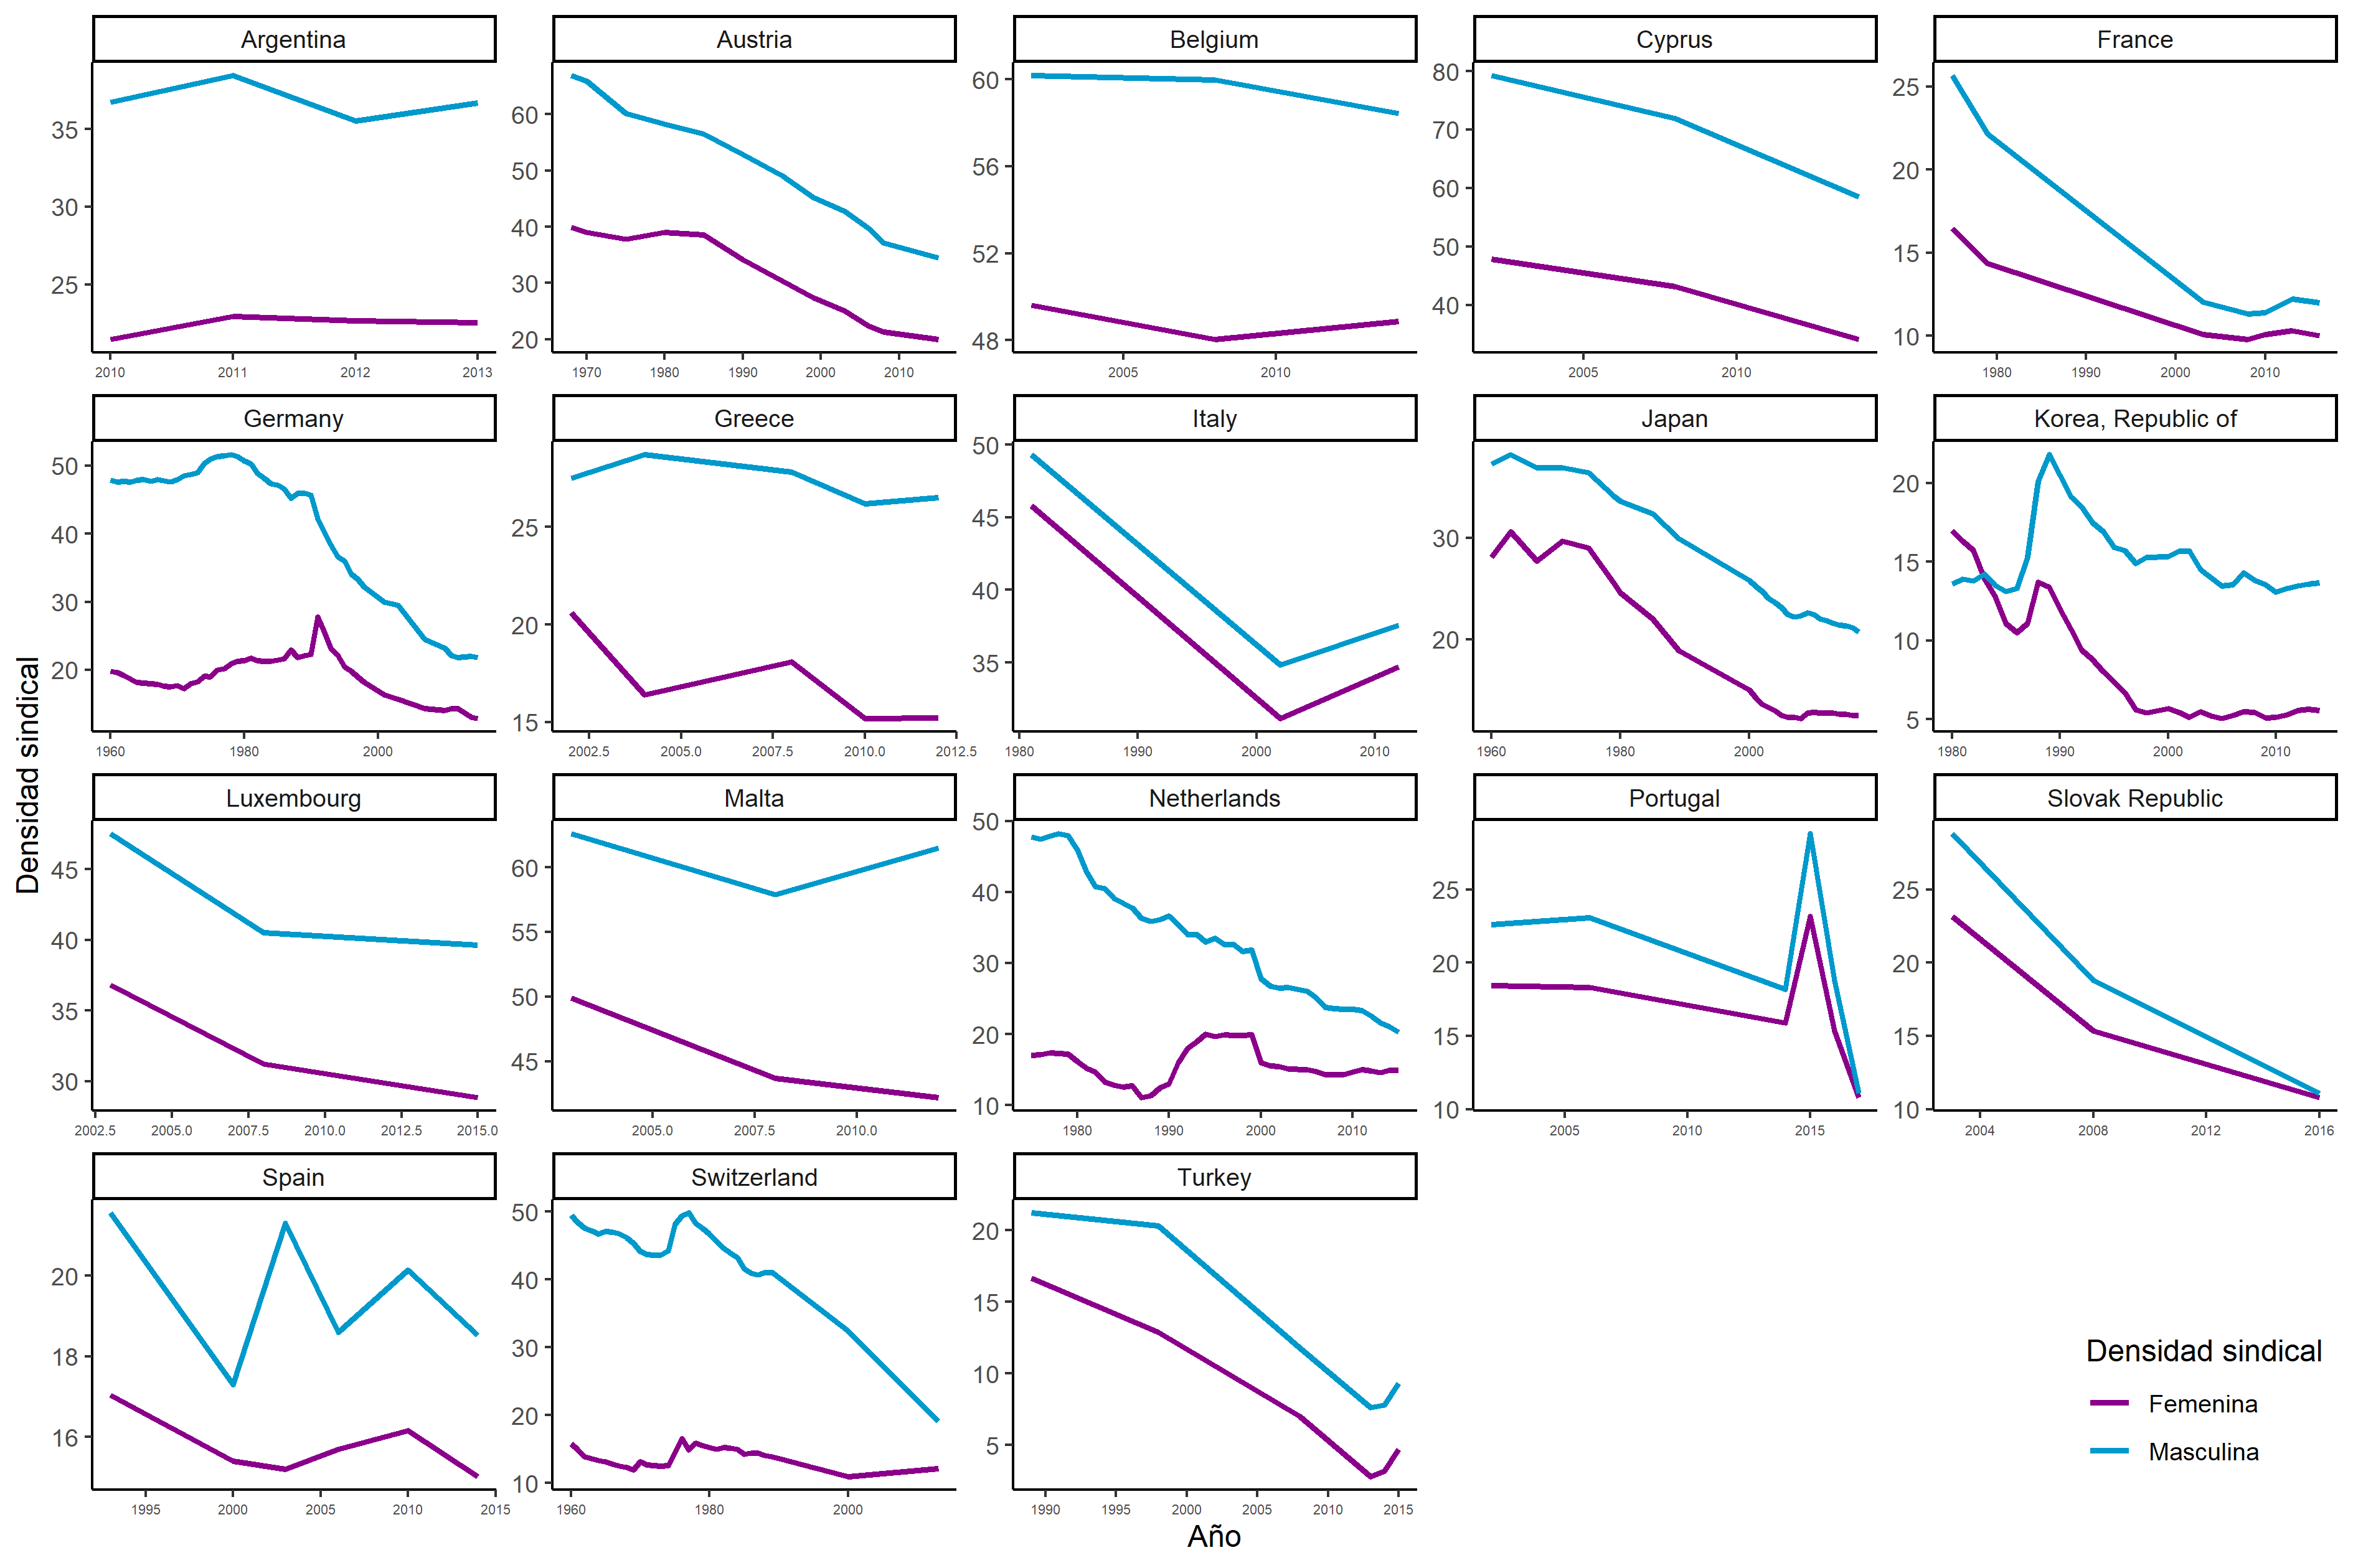 Evolución de la densidad sindical por sexo, países feminizado. Fuente: Elaboración propia en base a encuestas de hogares e ICTWSS (2019)